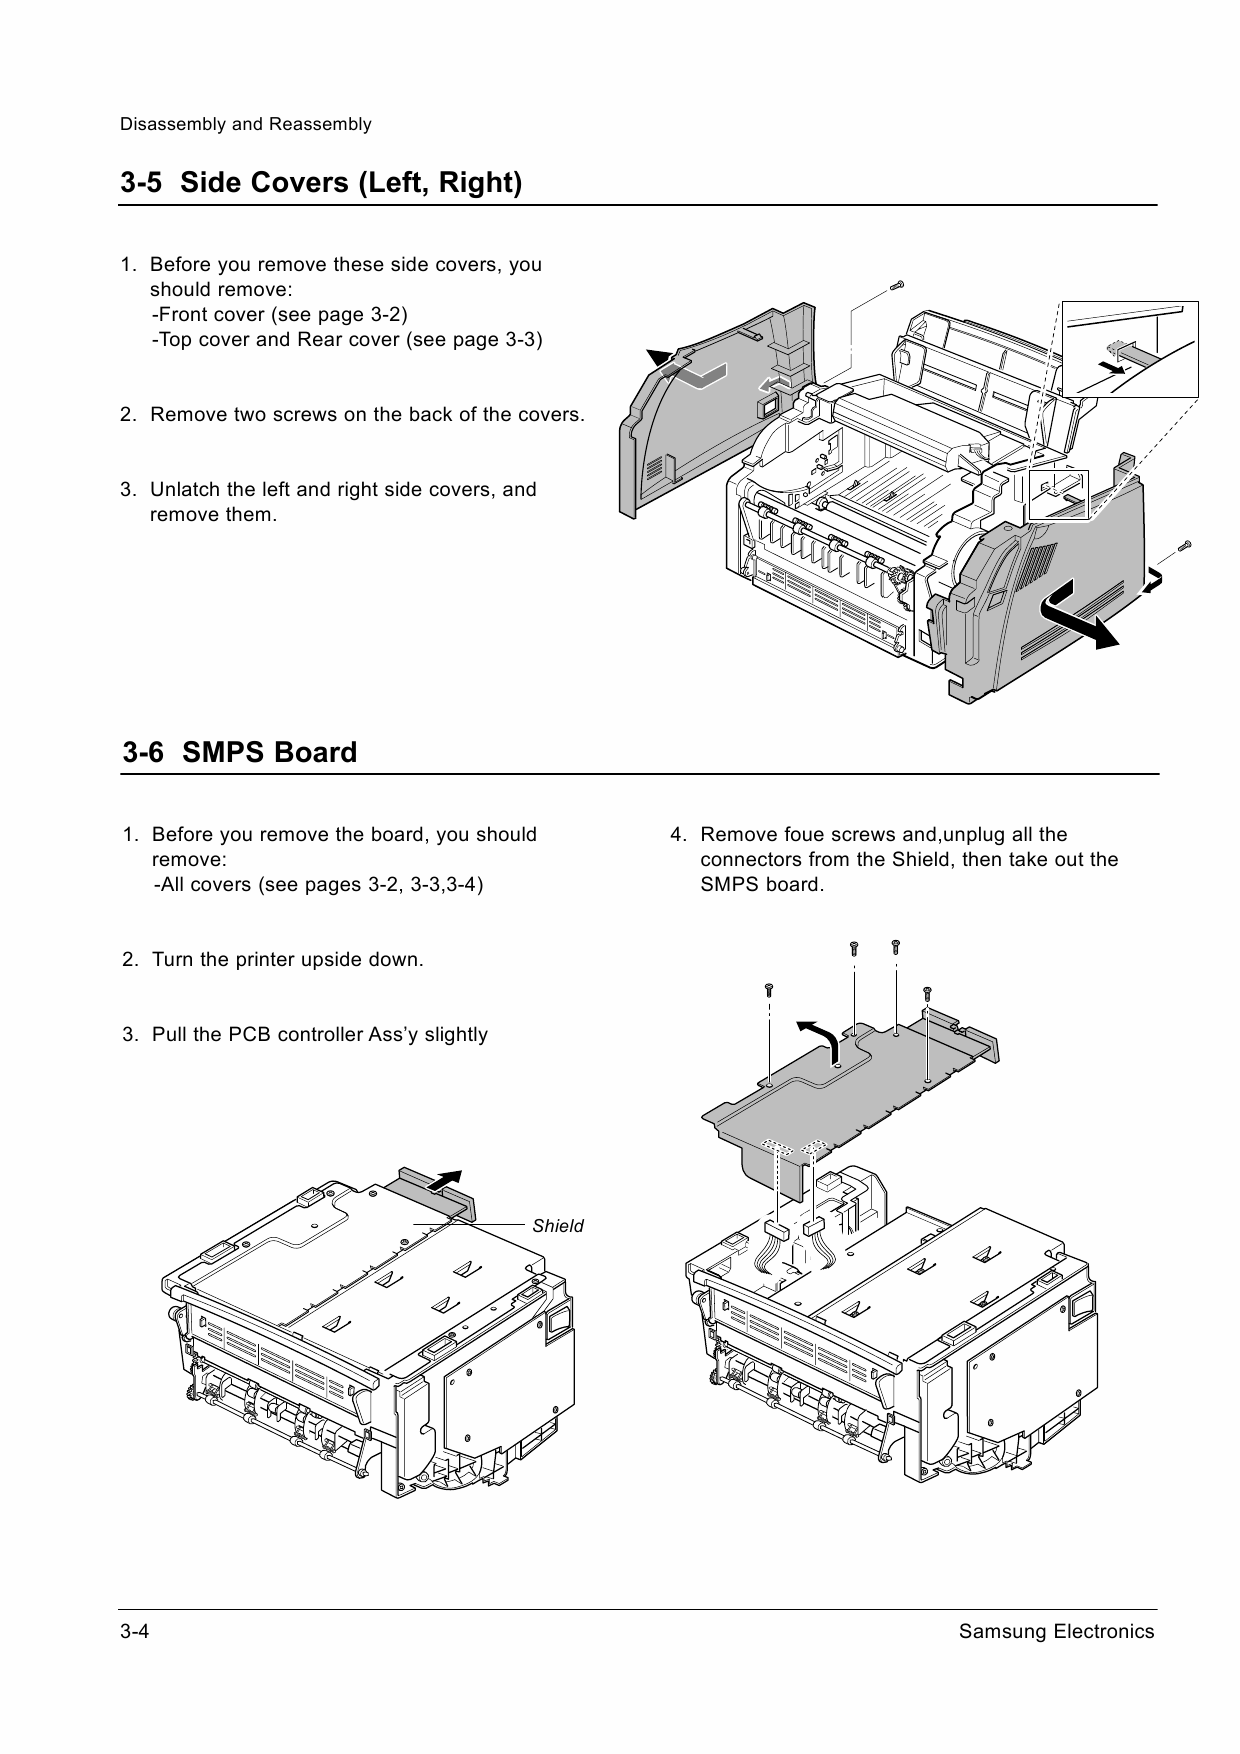 Samsung Laser-Printer ML-5200A Parts and Service Manual-3